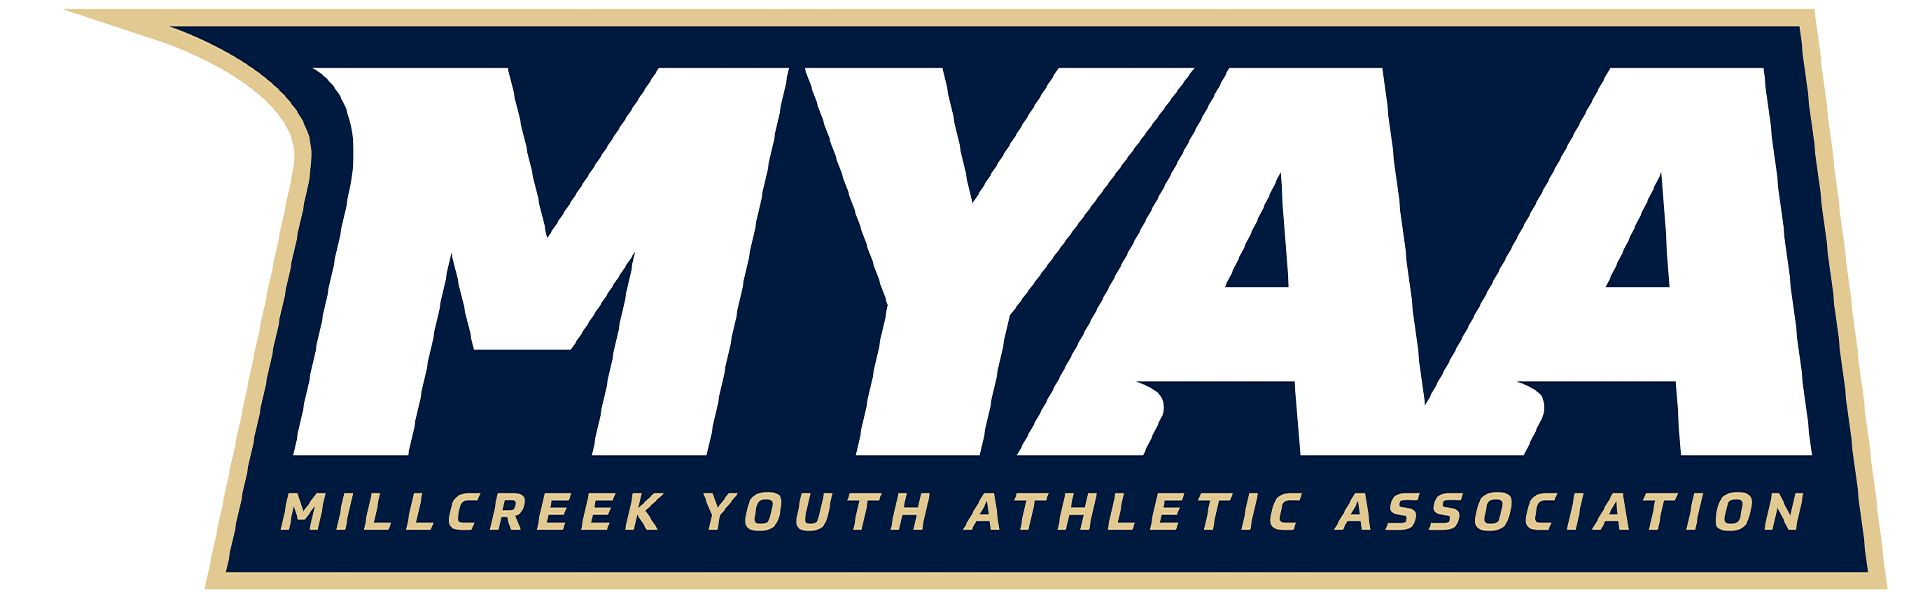 Millcreek youth Athlethic Association